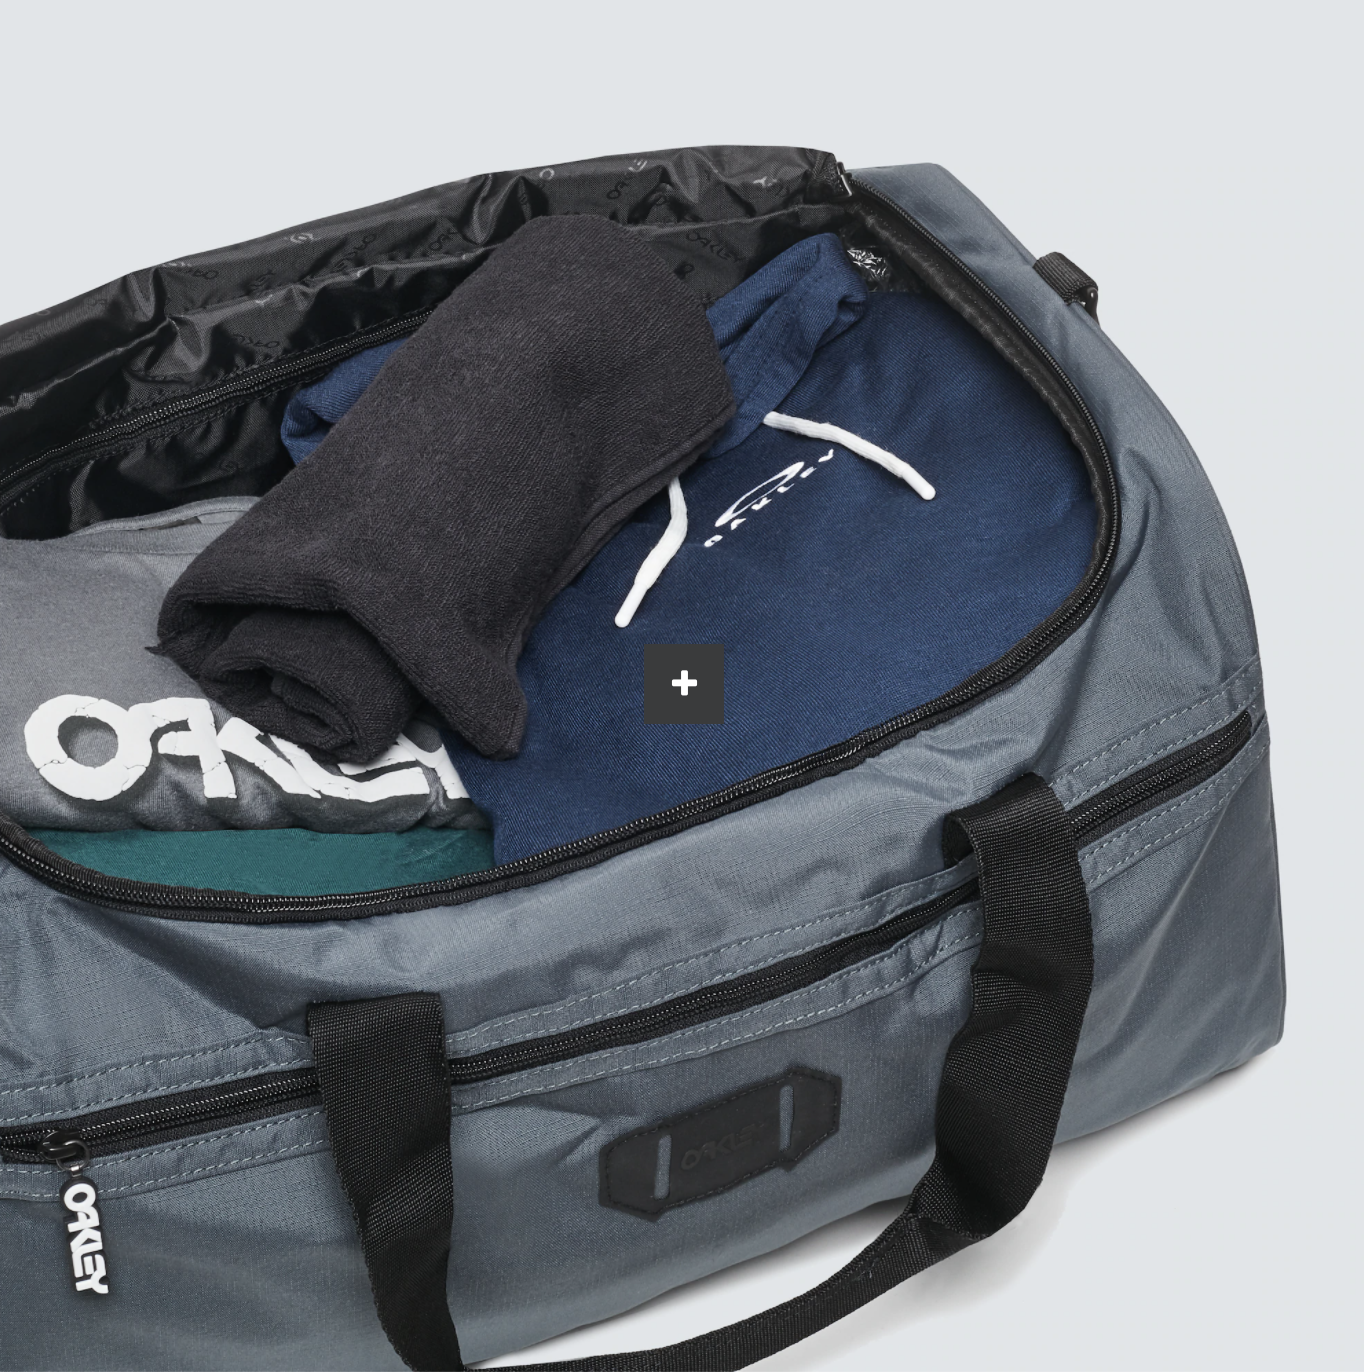 Oakley Street Duffle Bag 2.0 - Uniform Gray - FOS900056-25N |